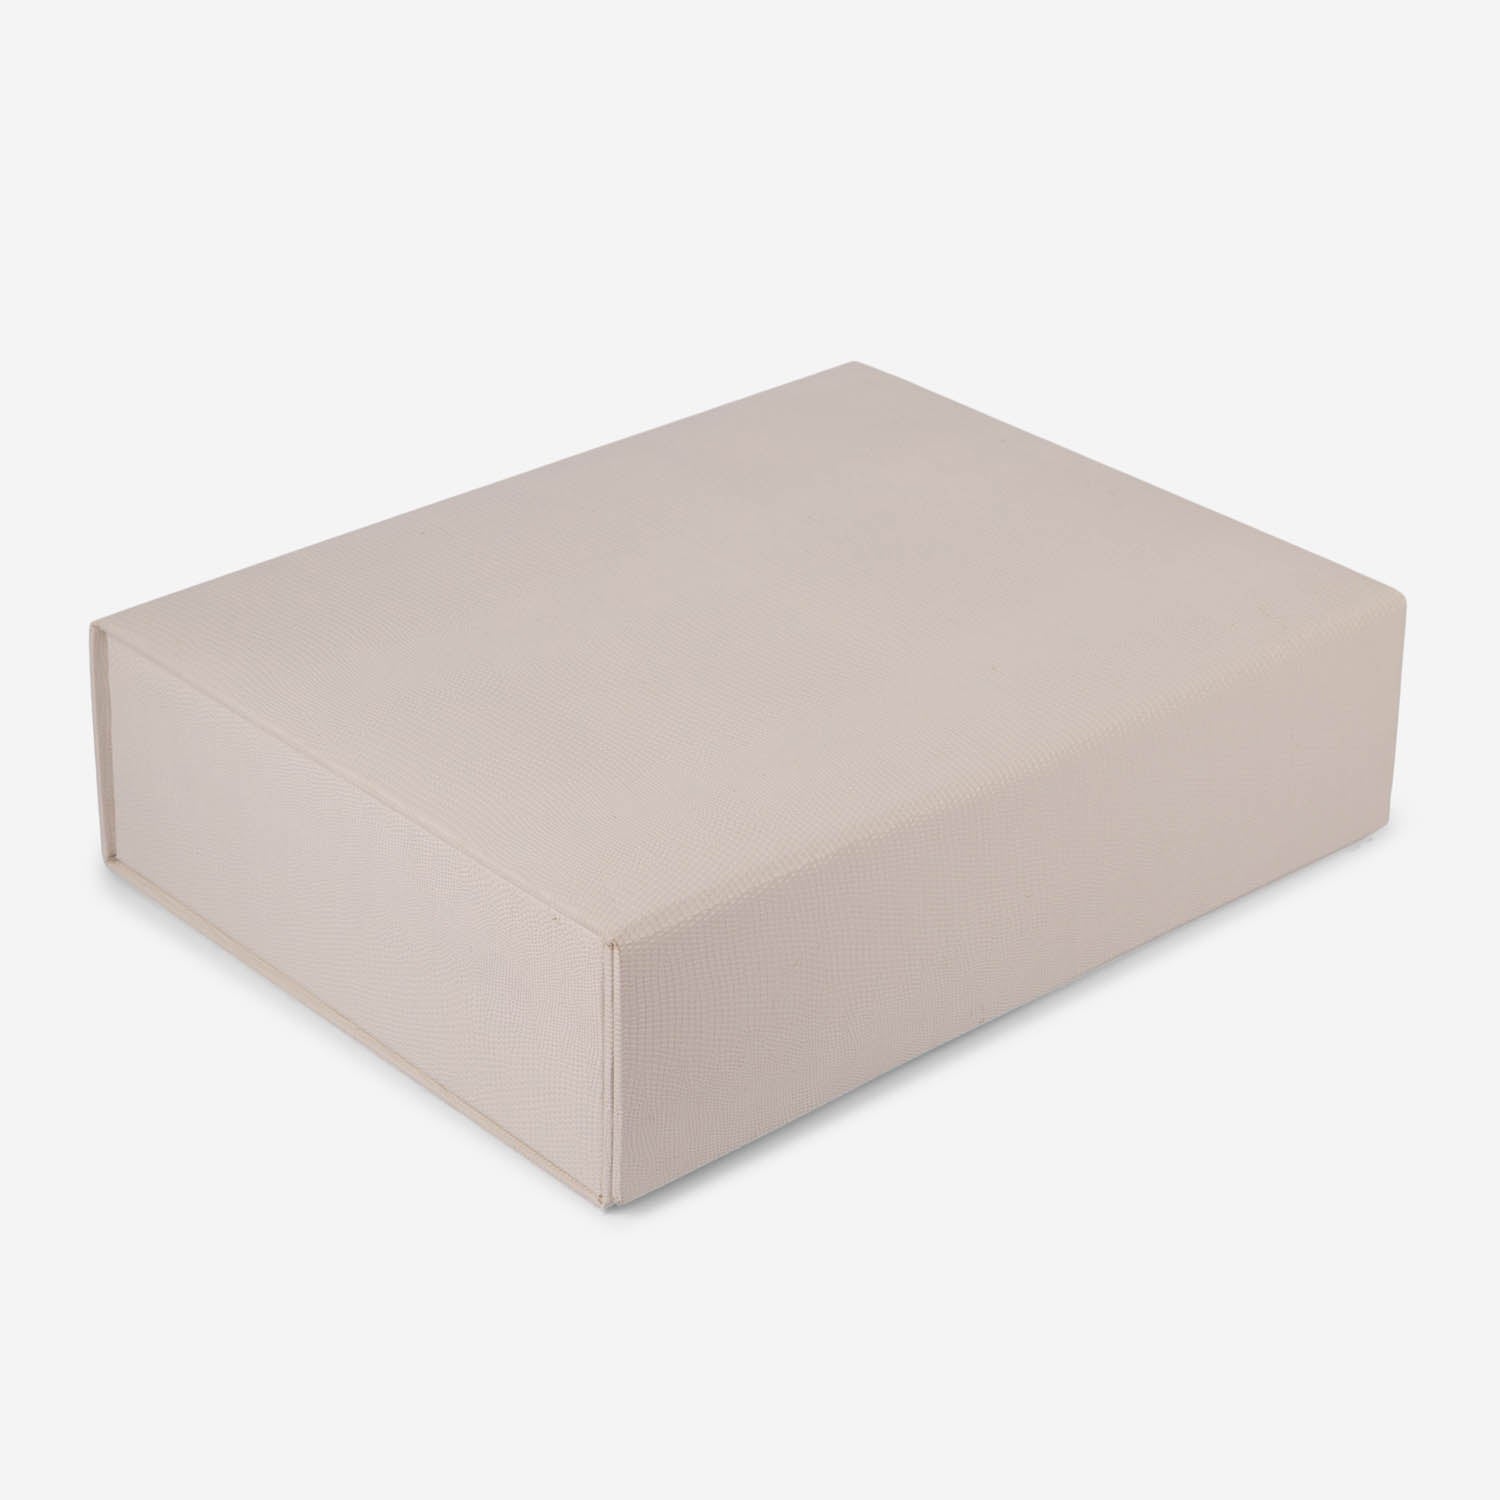 White Textured Paper Gift Box